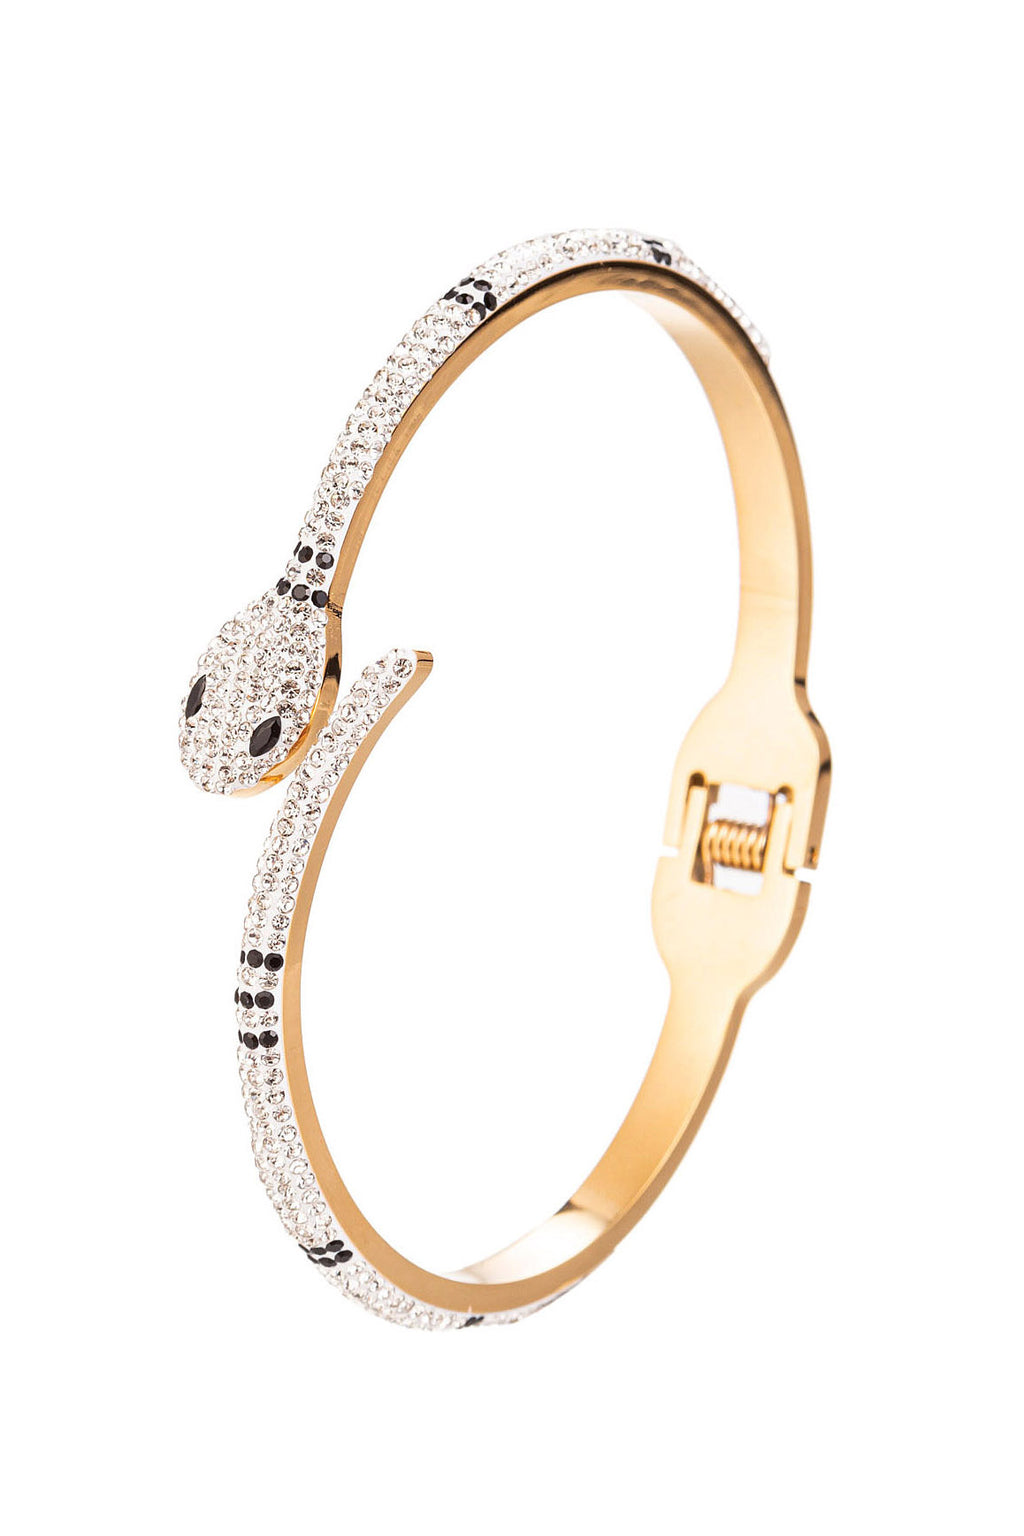 Gold brass snake bracelet studded with black and white CZ crystals.